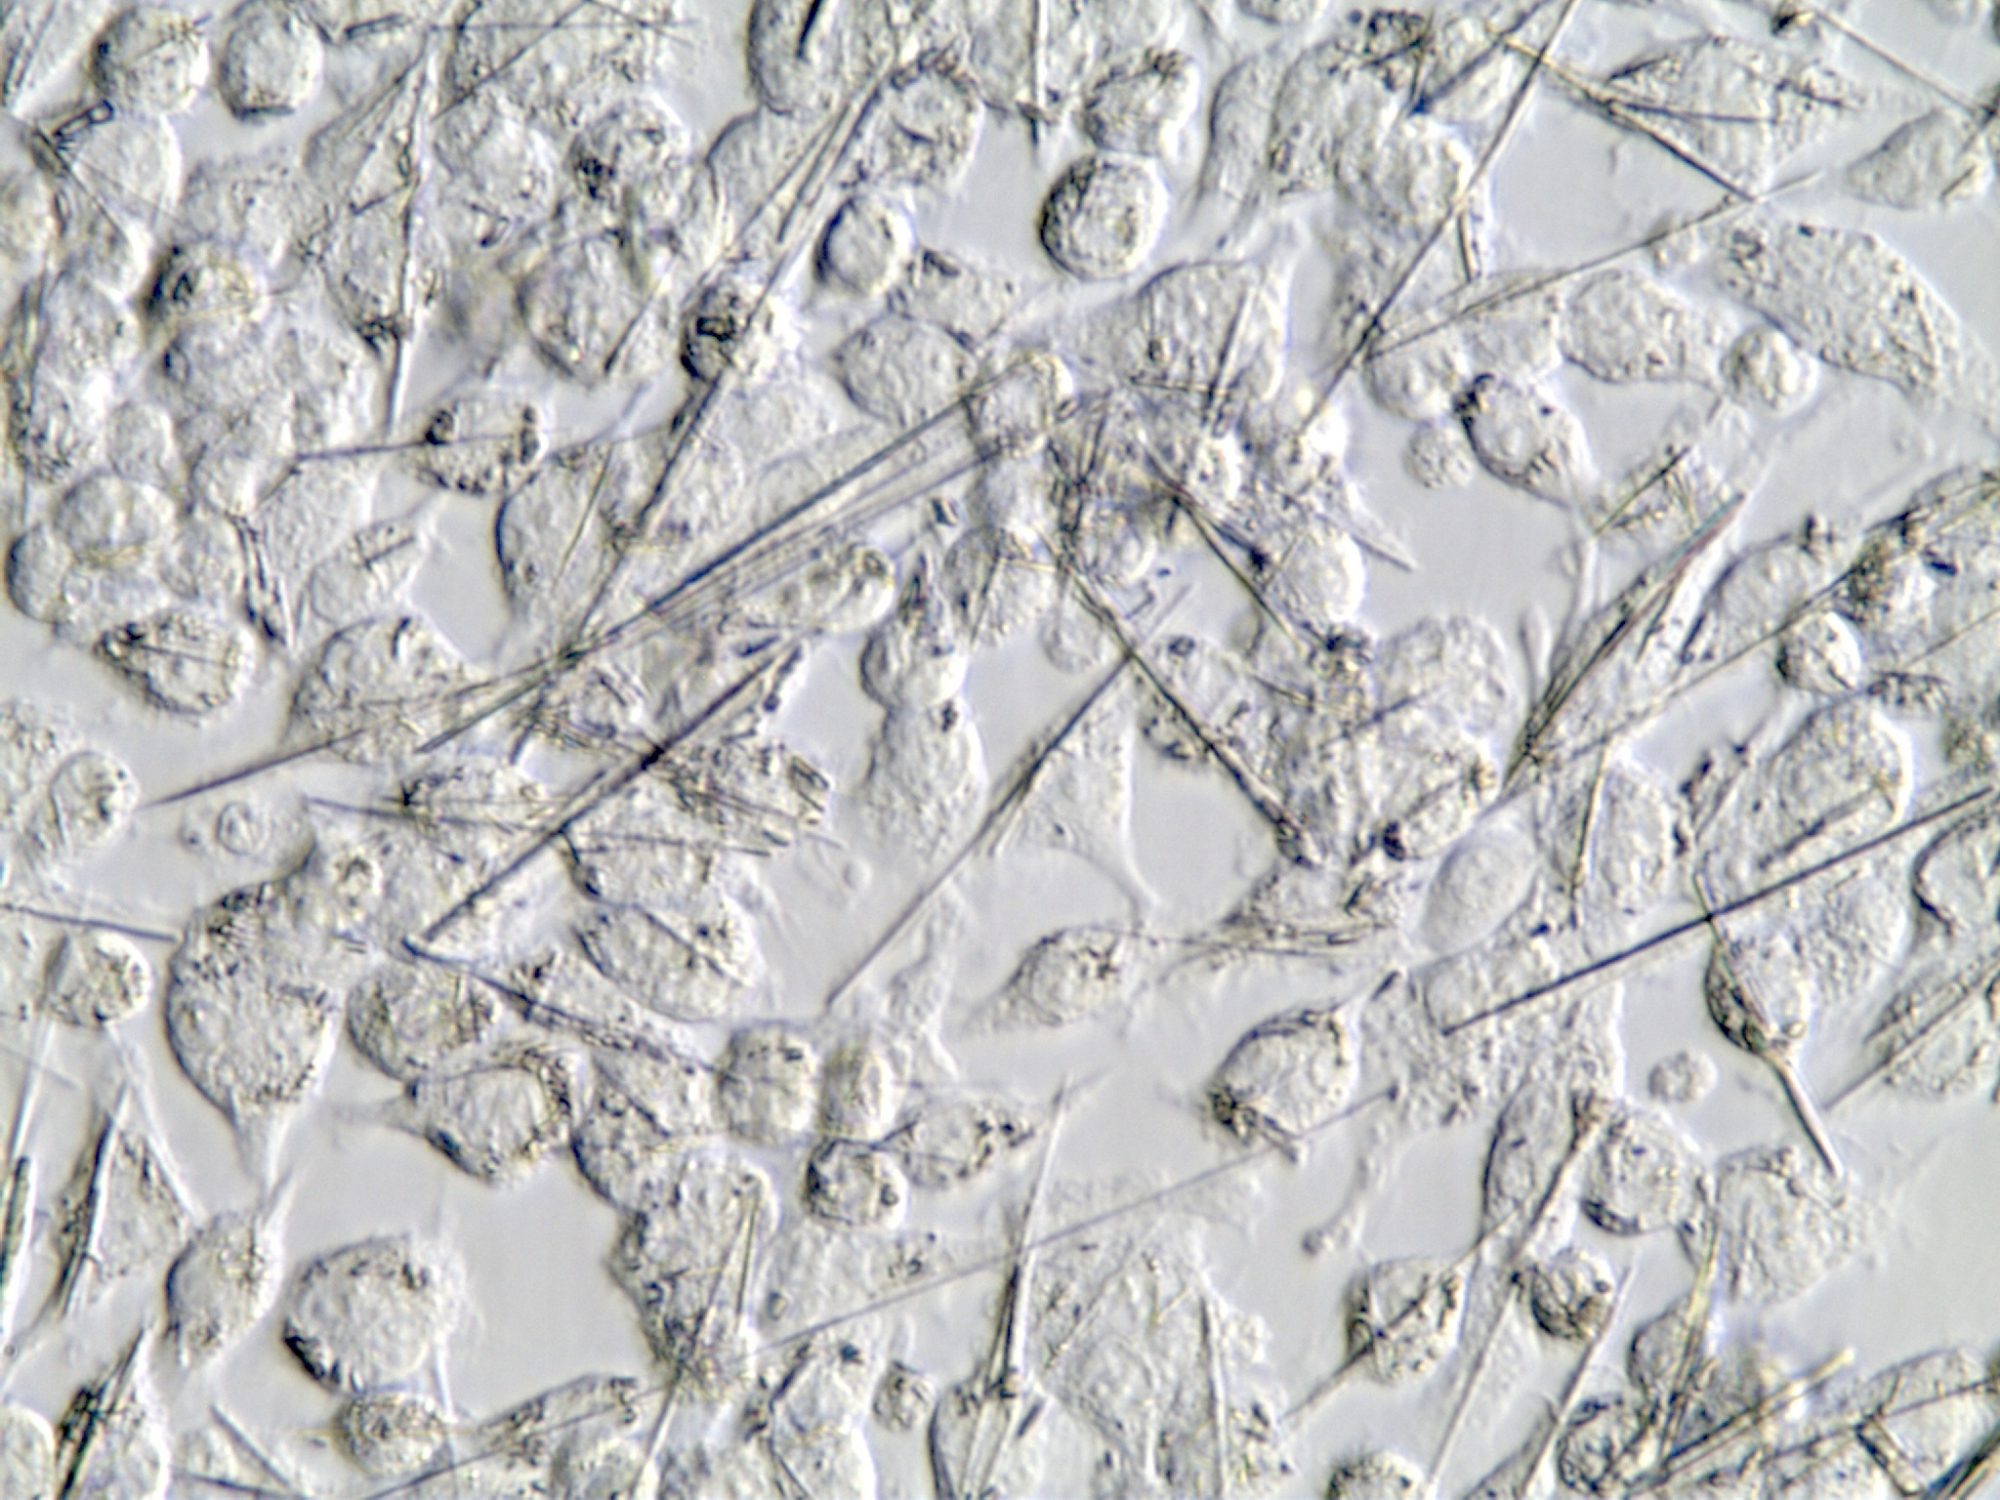 Amphibole fibers with cells